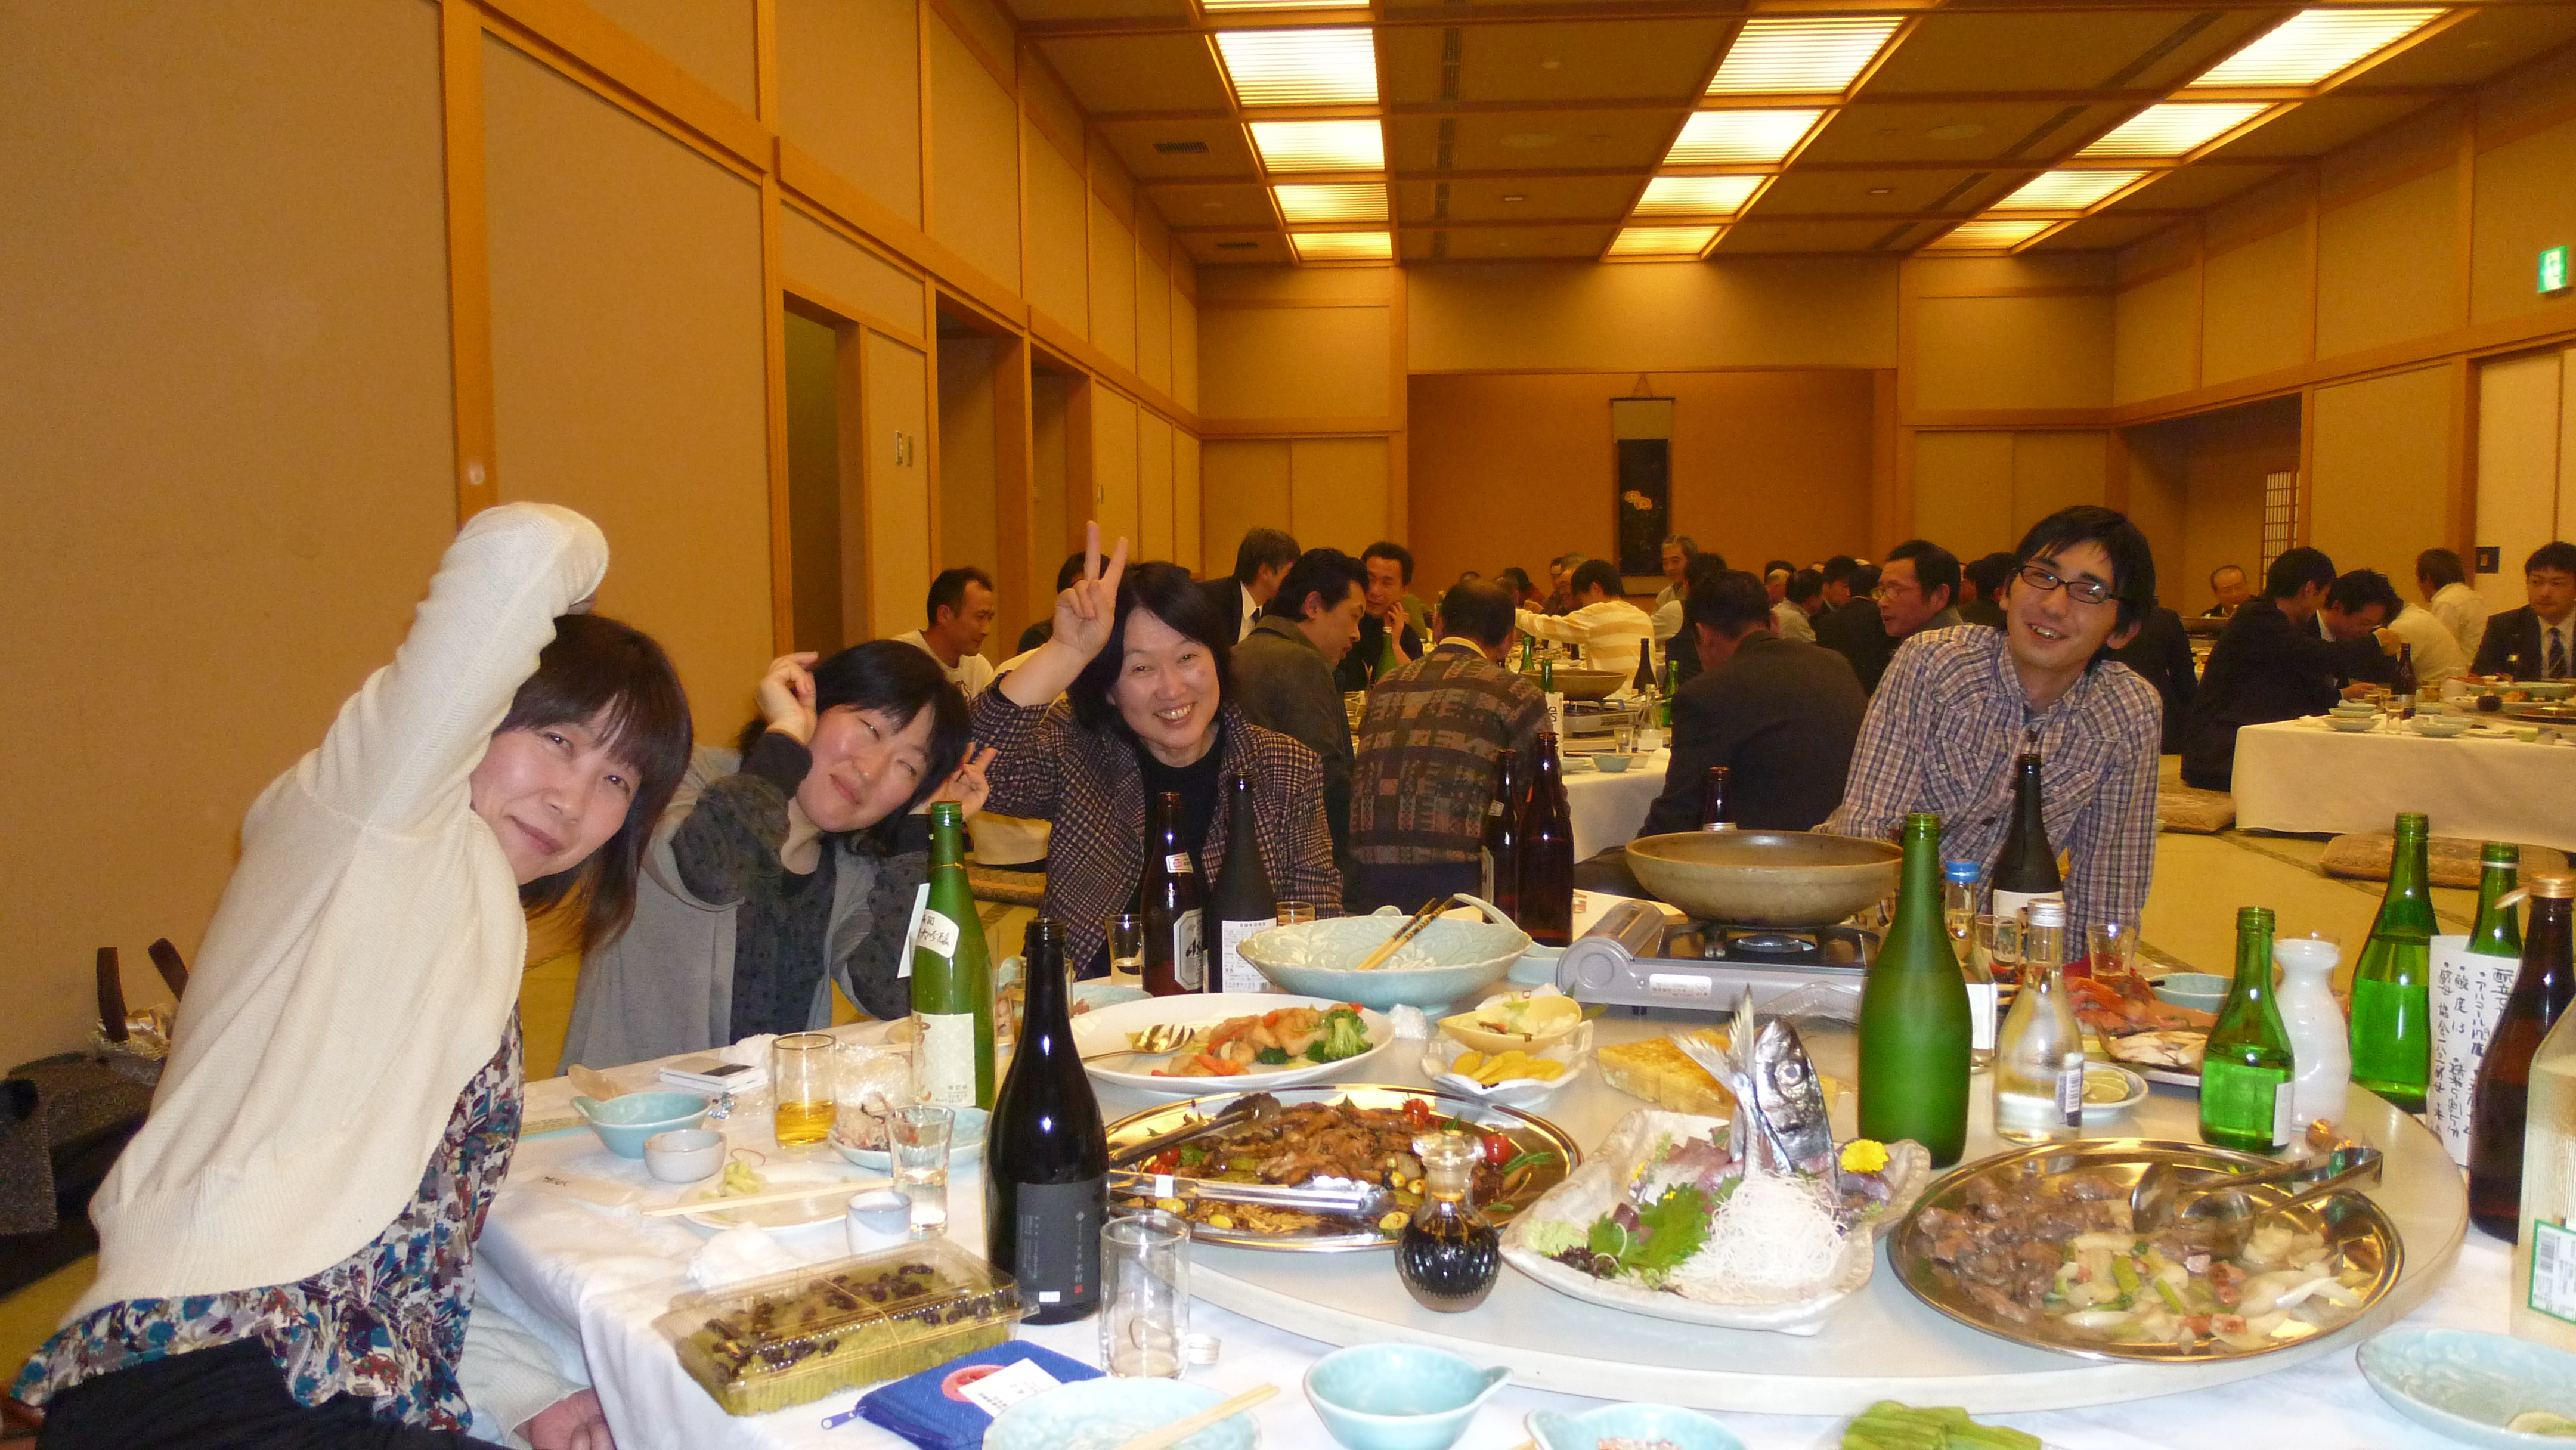 http://www.fukukomachi.com/blog/photo/20111118%20015.jpg